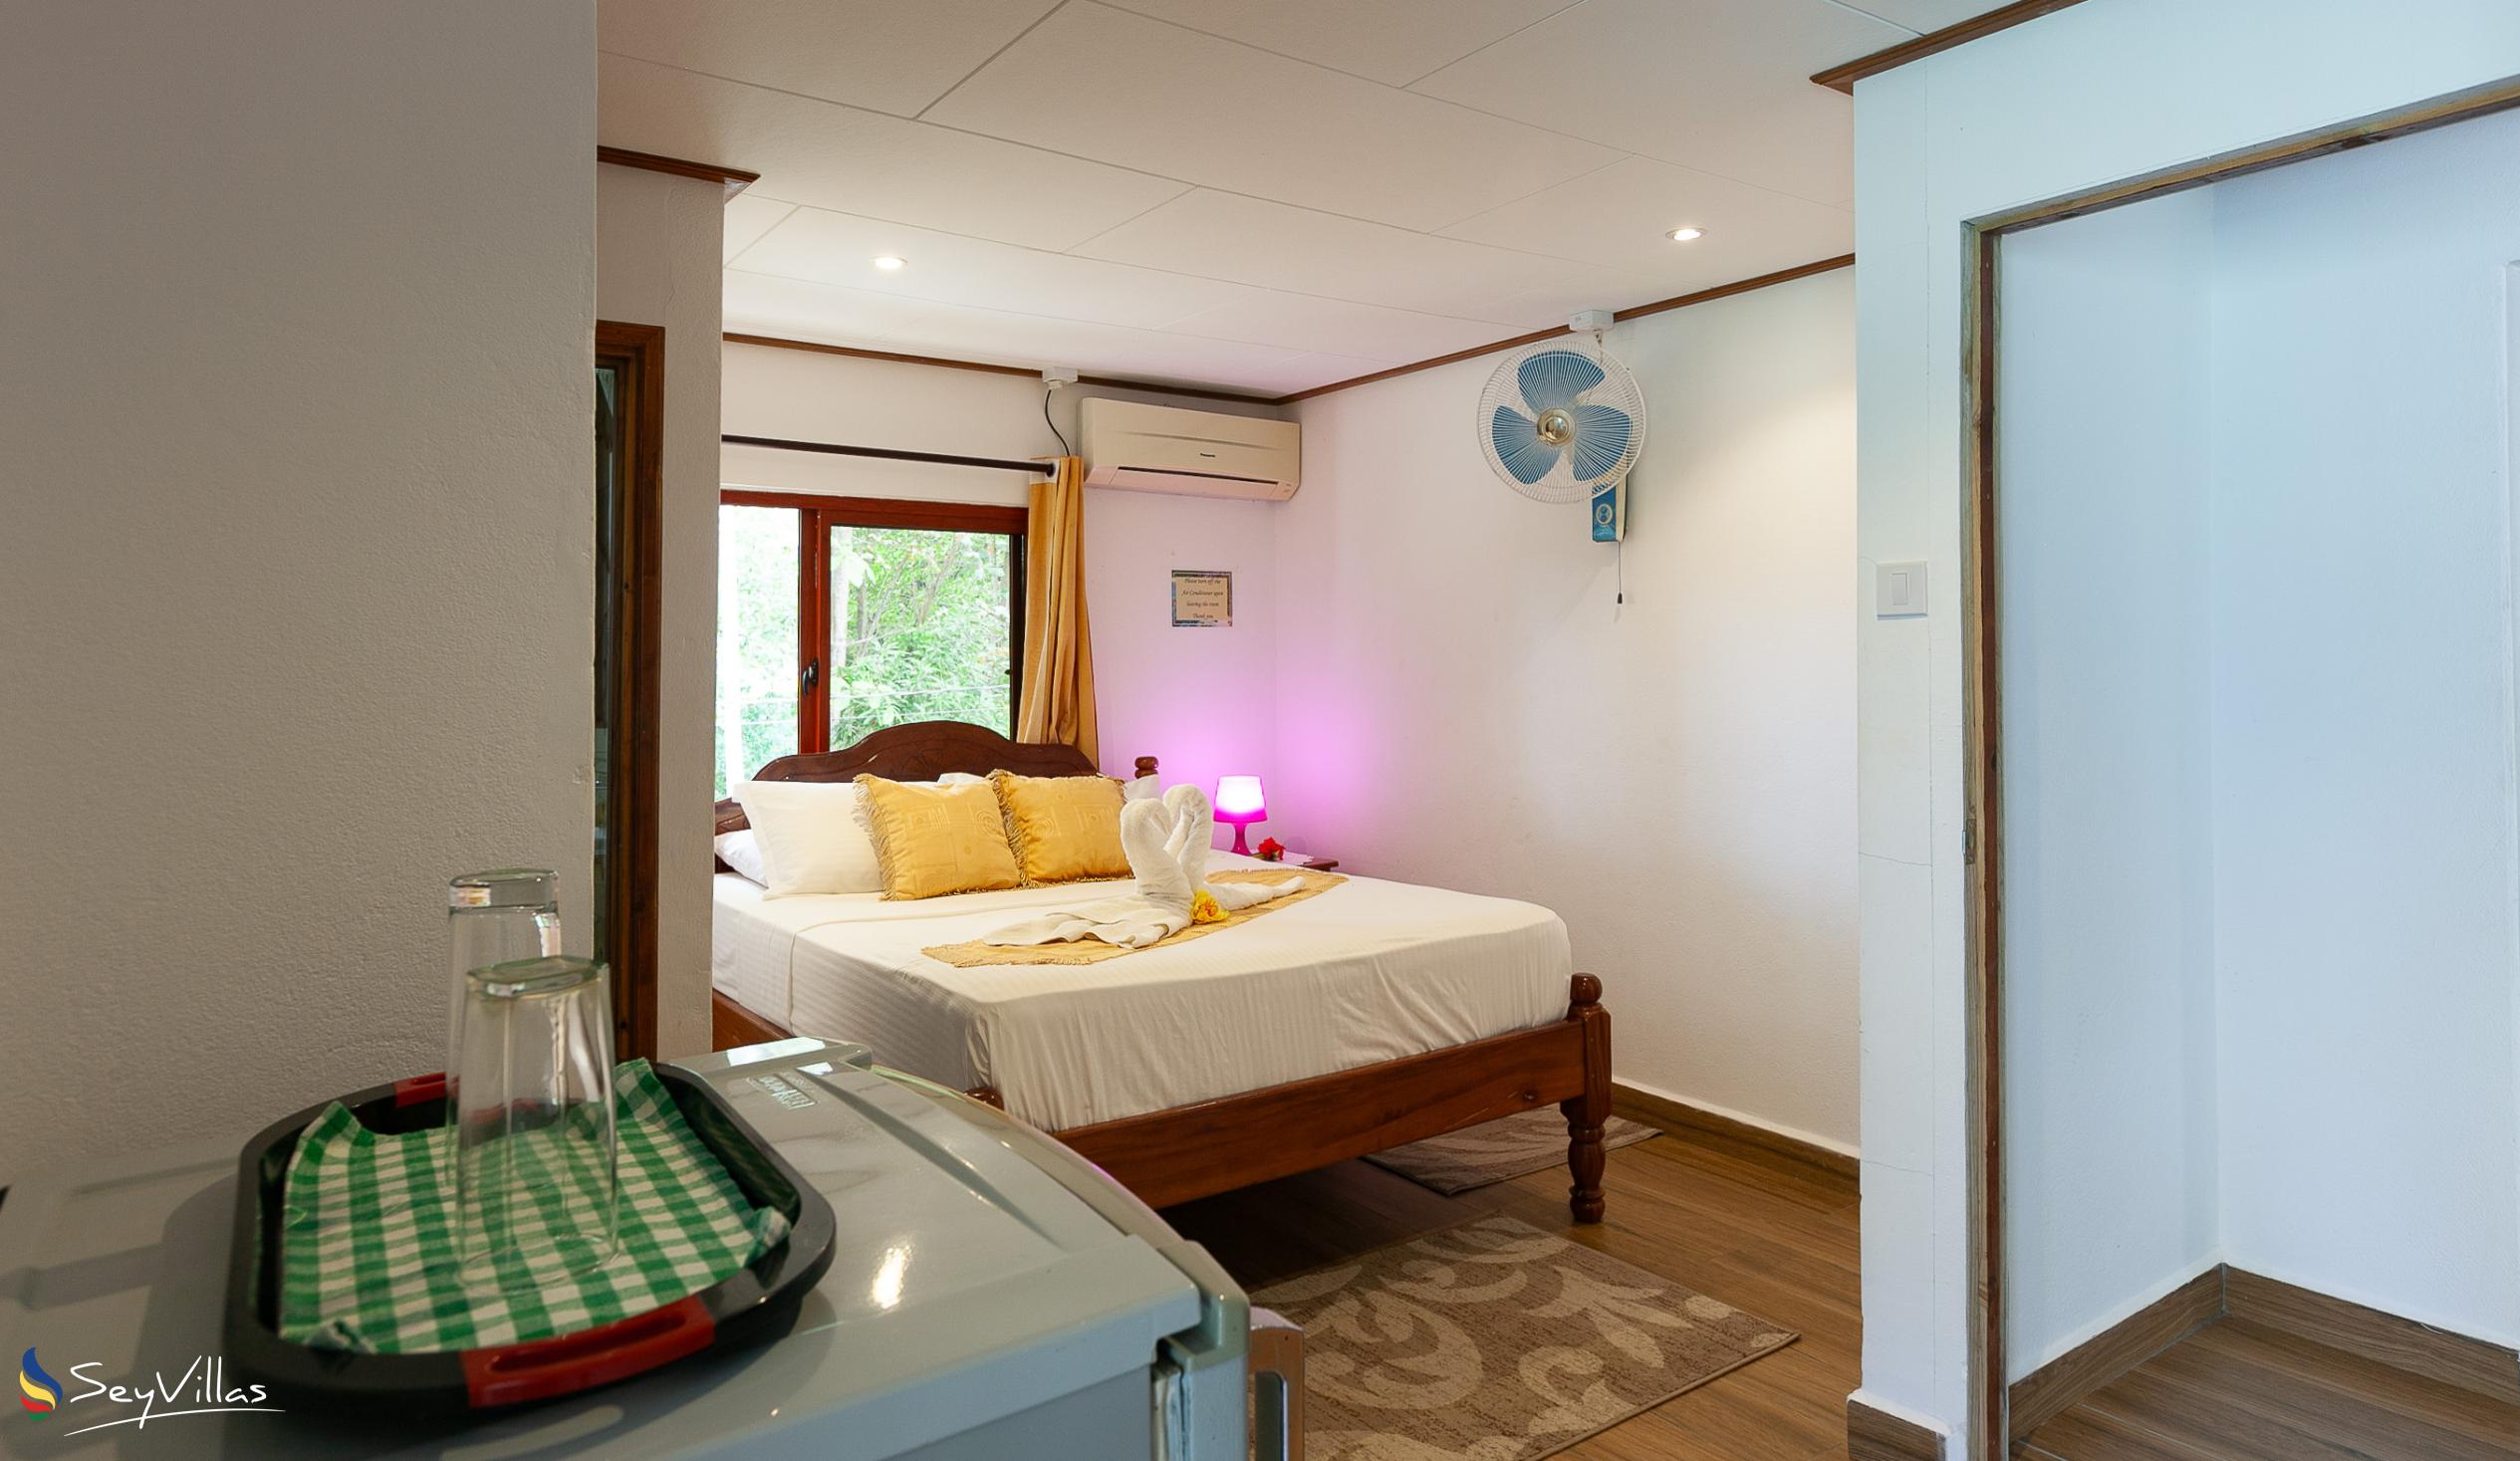 Photo 92: Tannette's Villa - Standard Queen Room - La Digue (Seychelles)